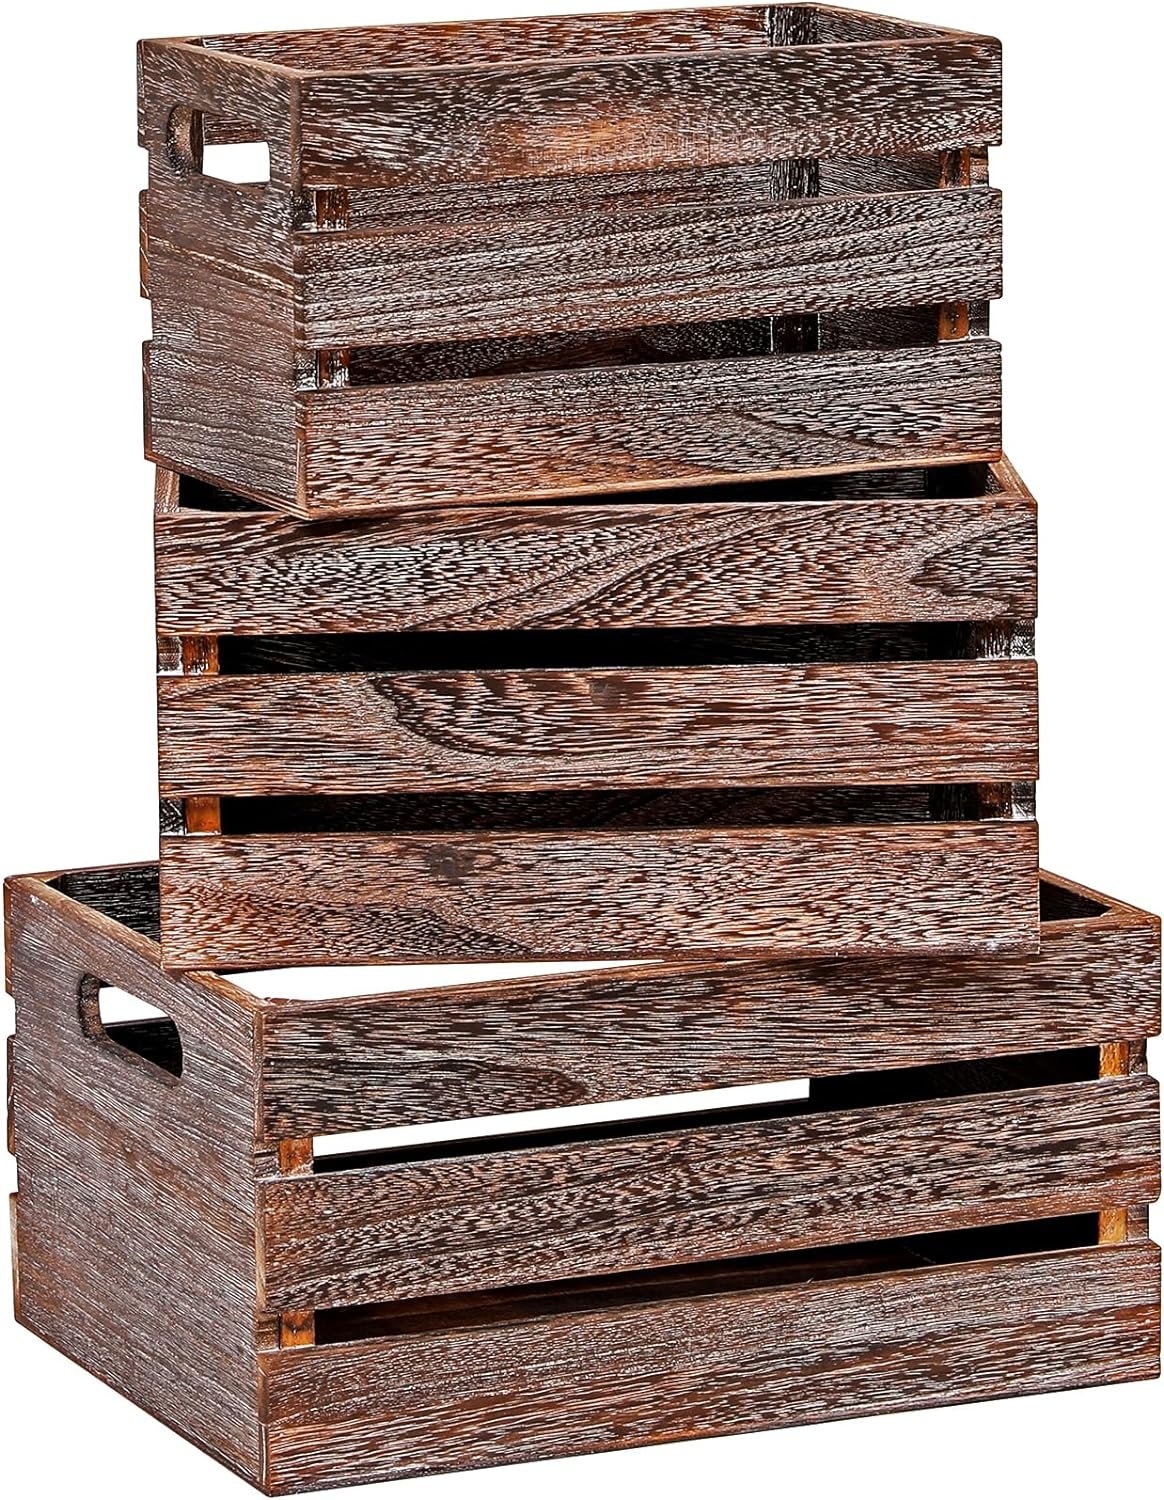 Decorative Wood Crates Review